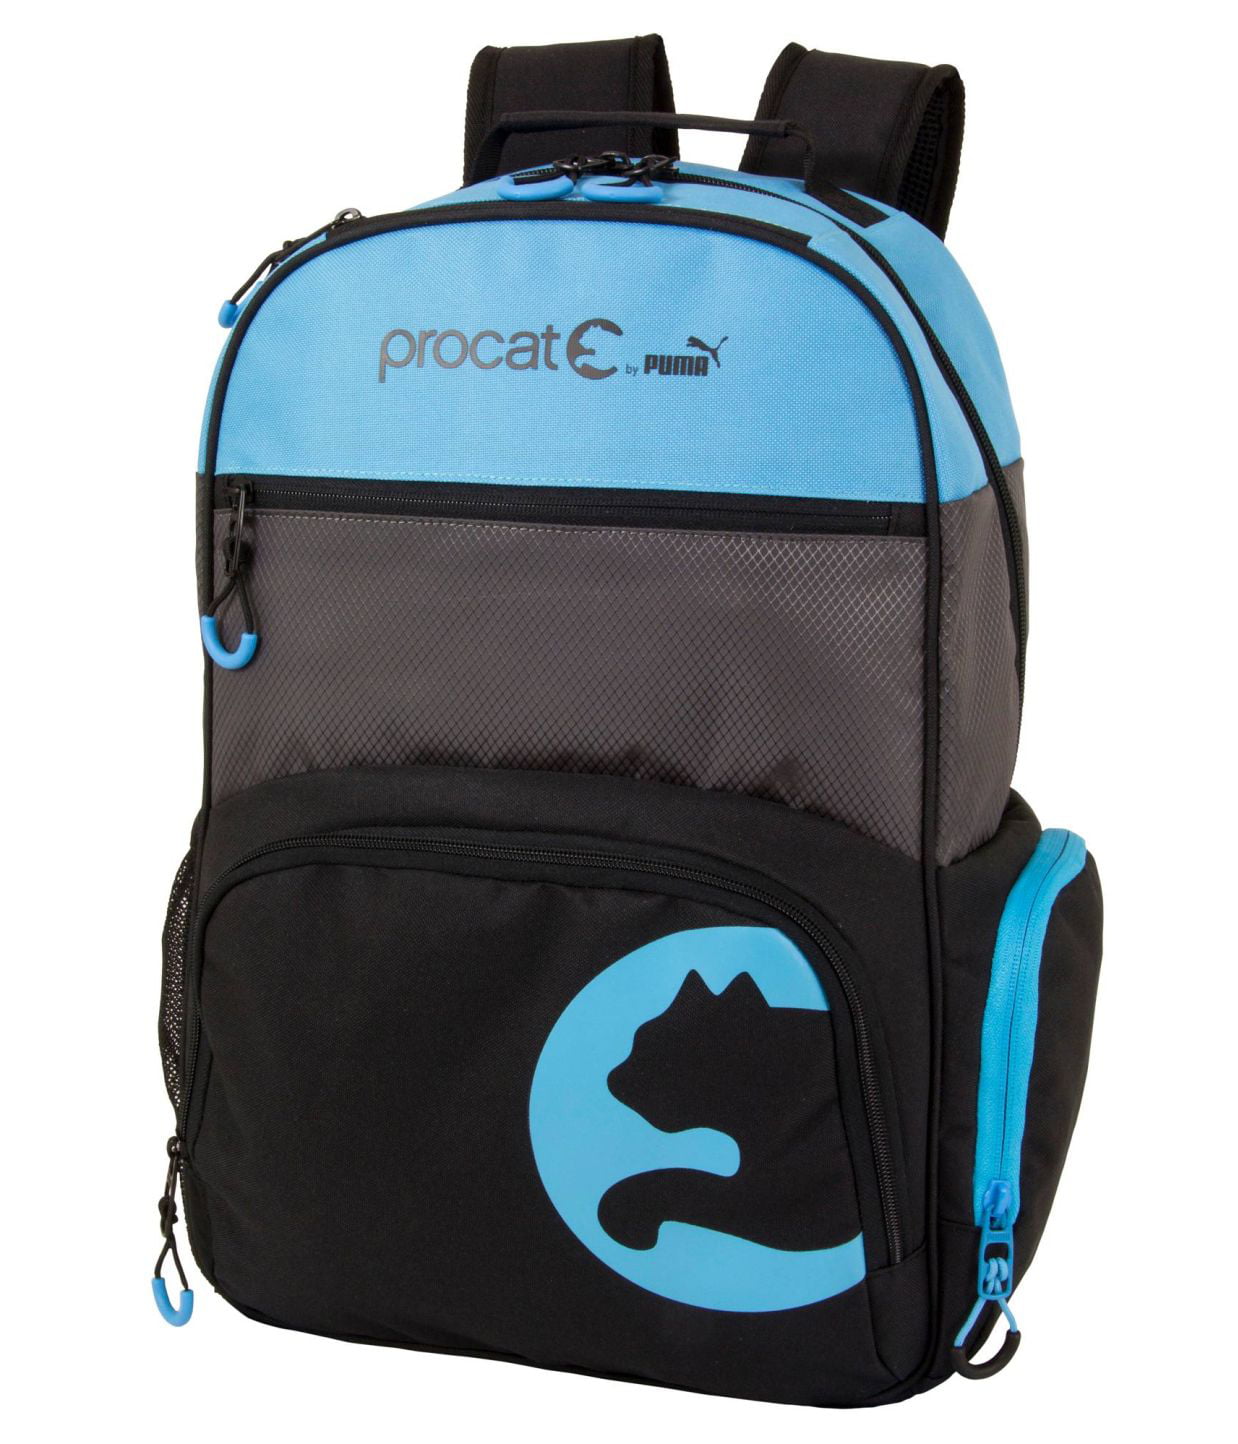 PUMA - 16 Procat Backpack - Black 